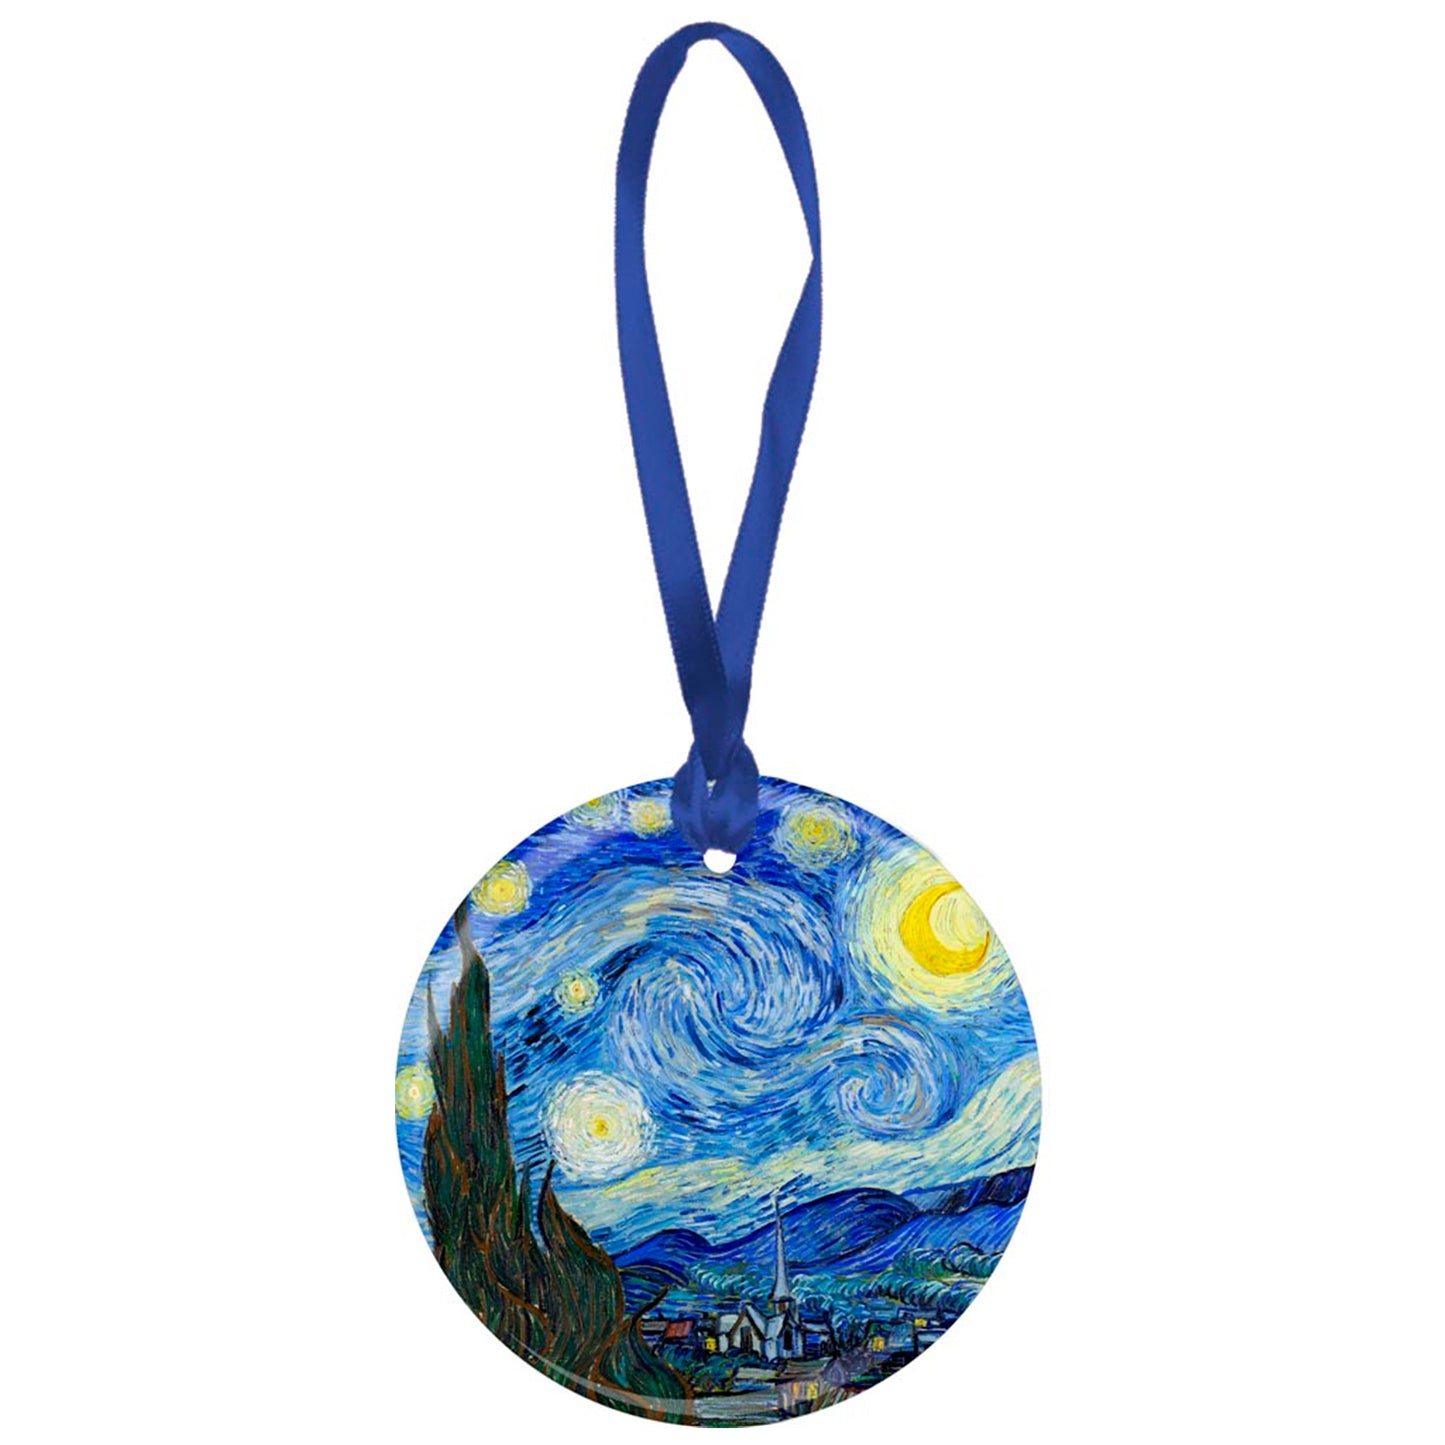 Van Gogh's "Starry Night" Porcelain Ornament